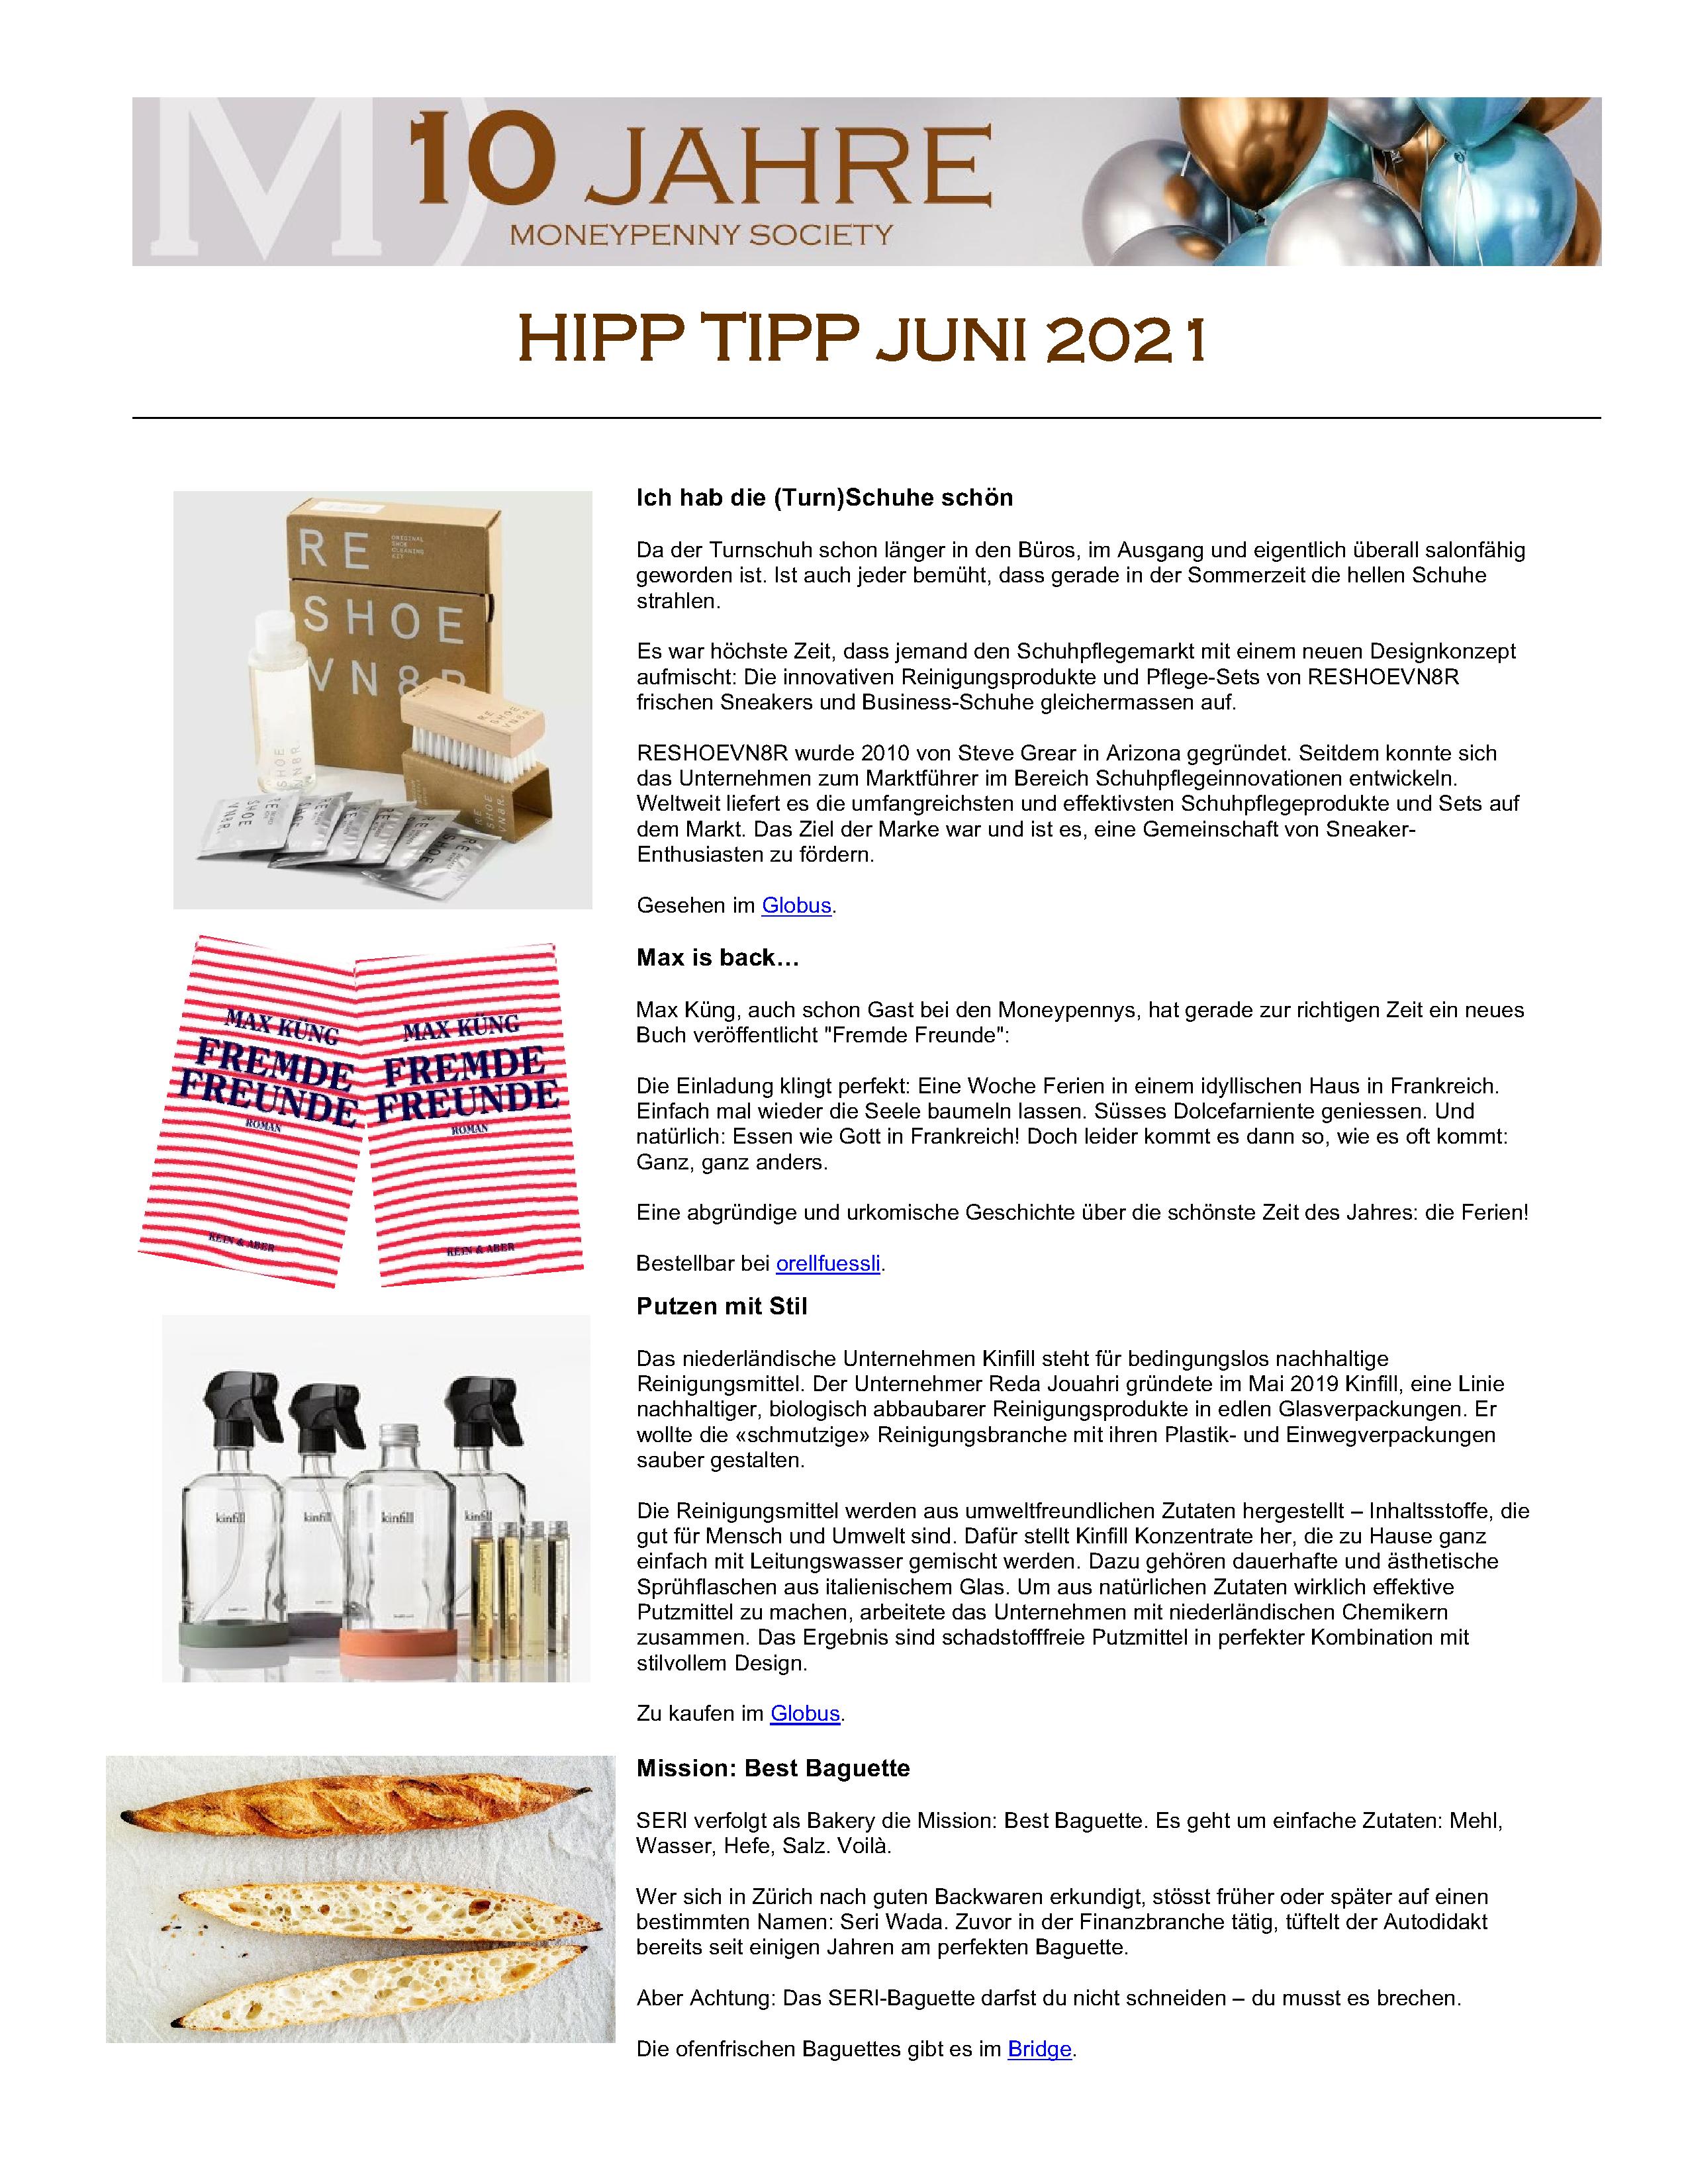 Hipp Tipp Juni 2021